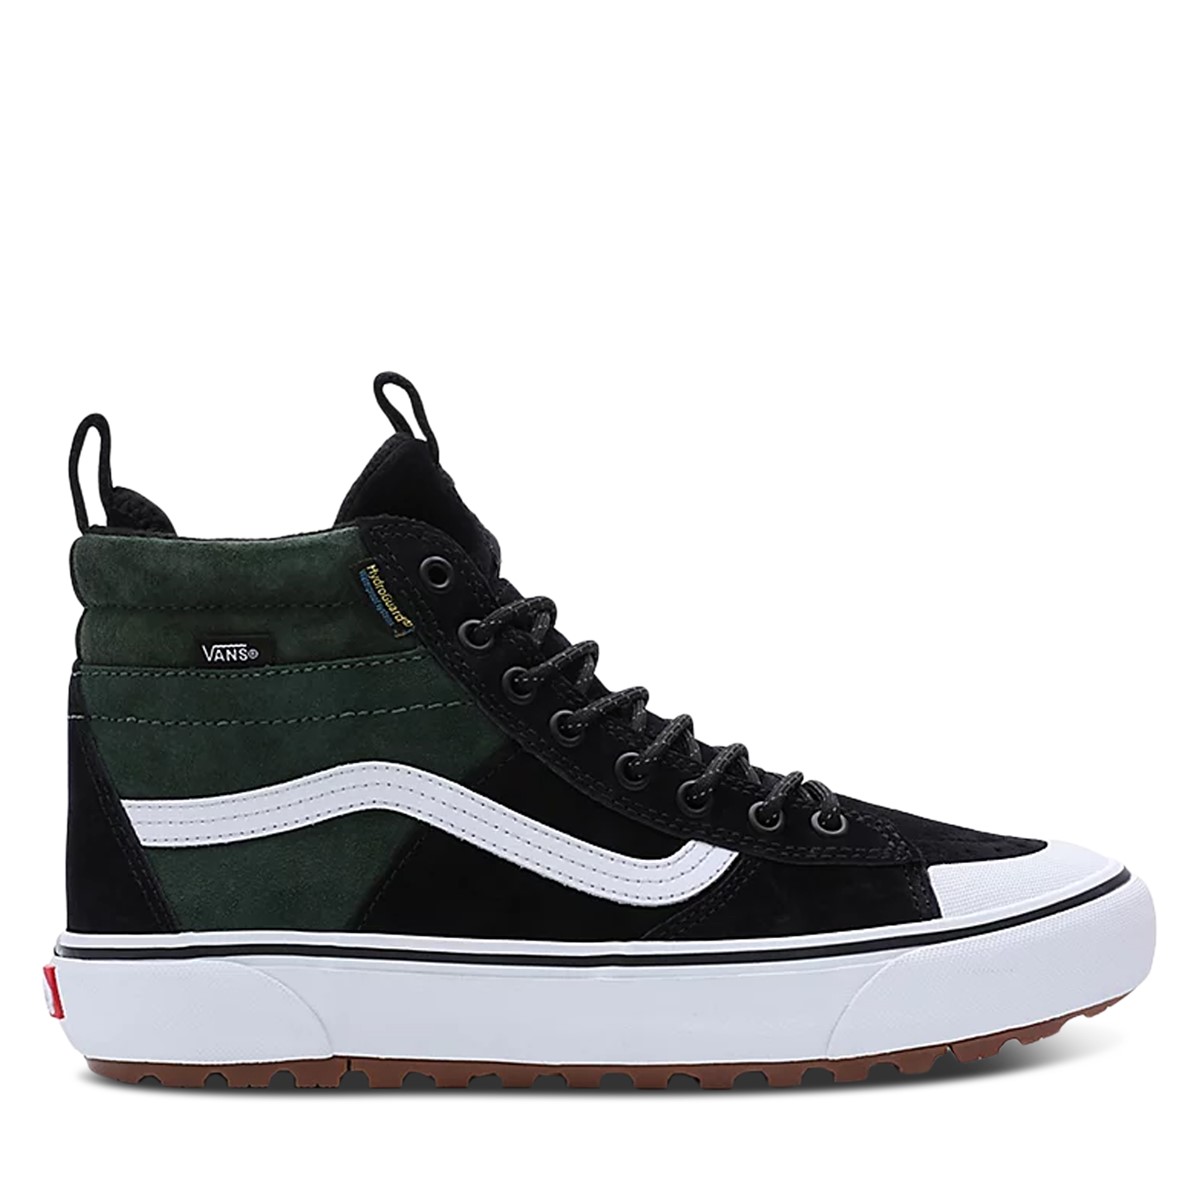 Men's SK8-Hi MTE-2 Sneaker Boots in Green/Black/White